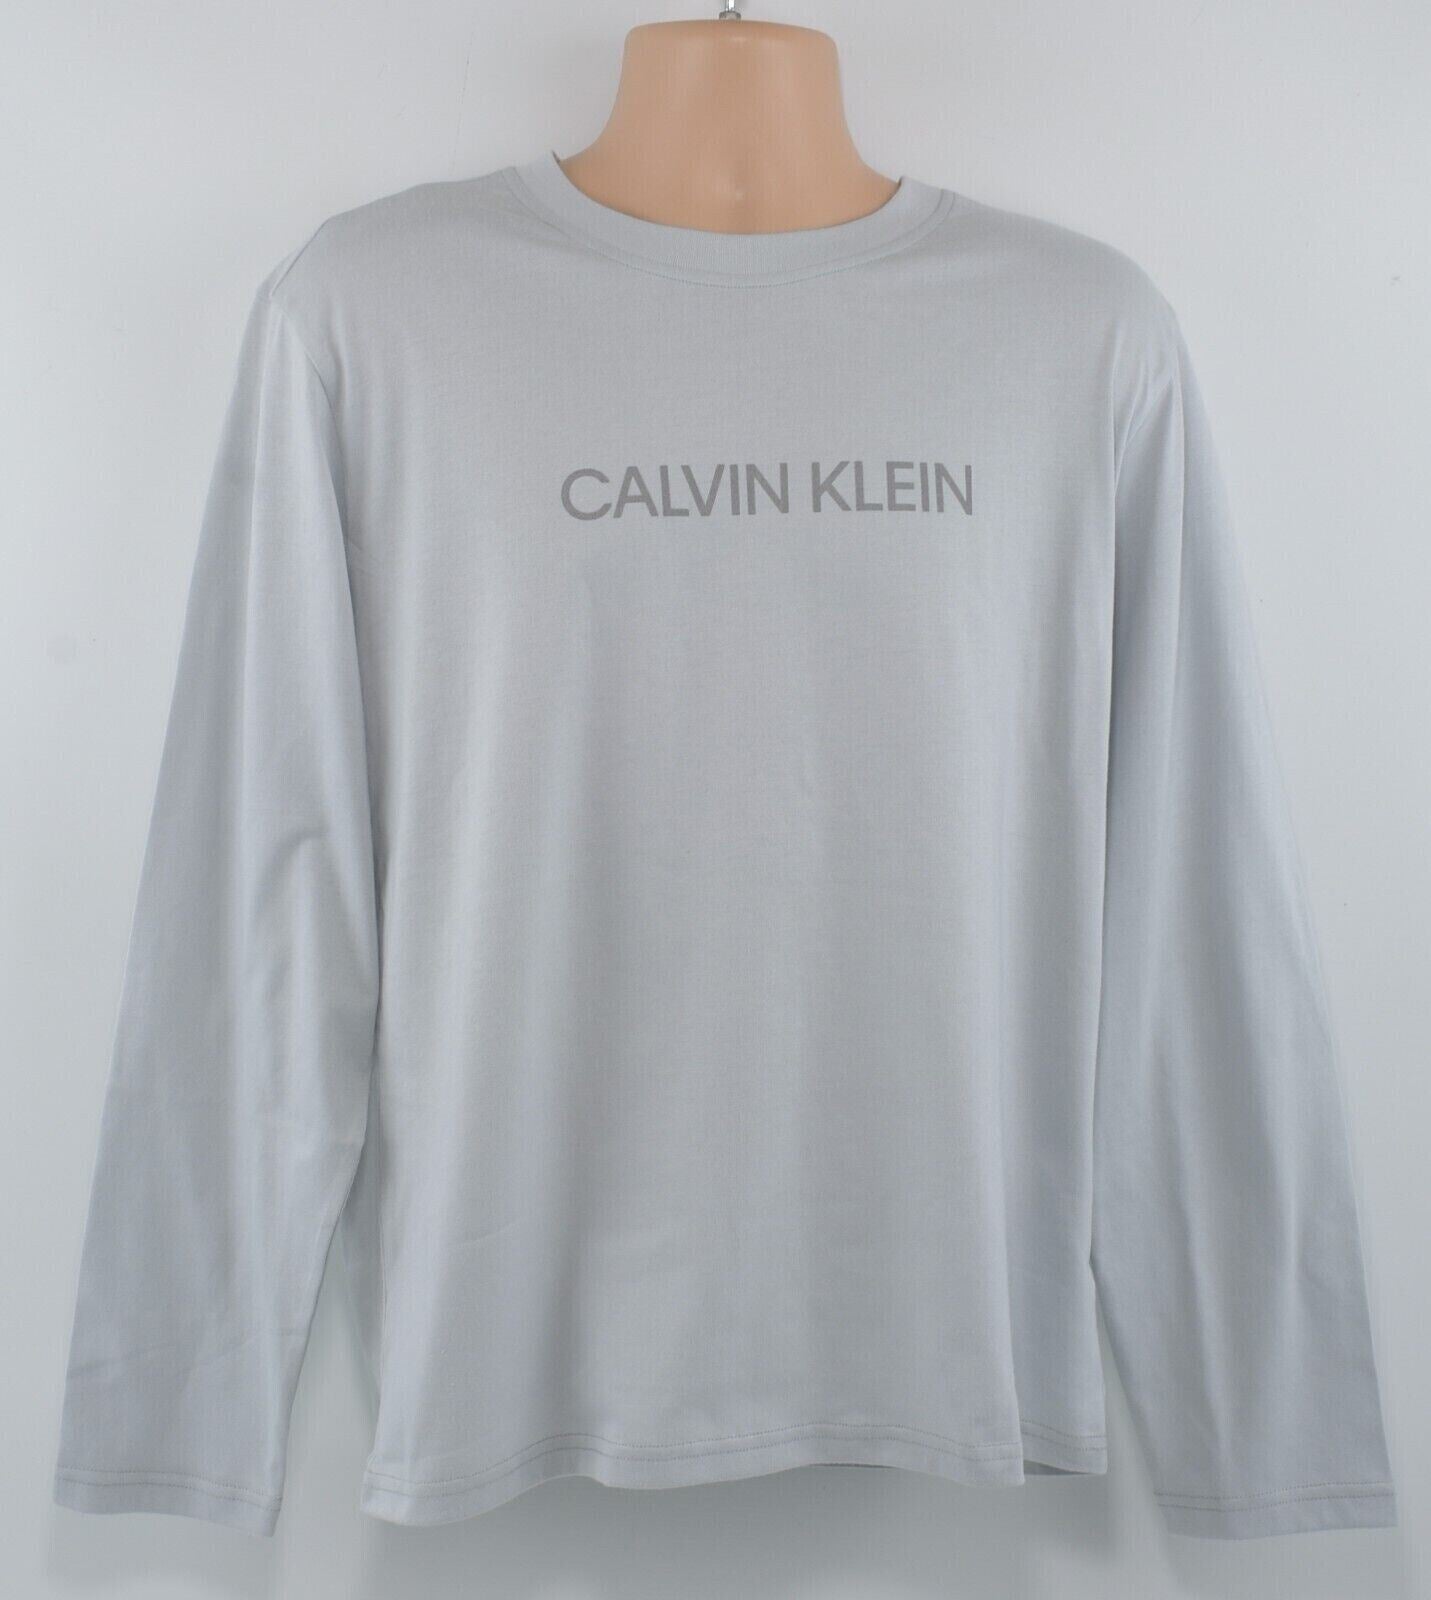 CALVIN KLEIN Performance: Men's Long Sleeve Crew Neck T-shirt Top, Grey, size M